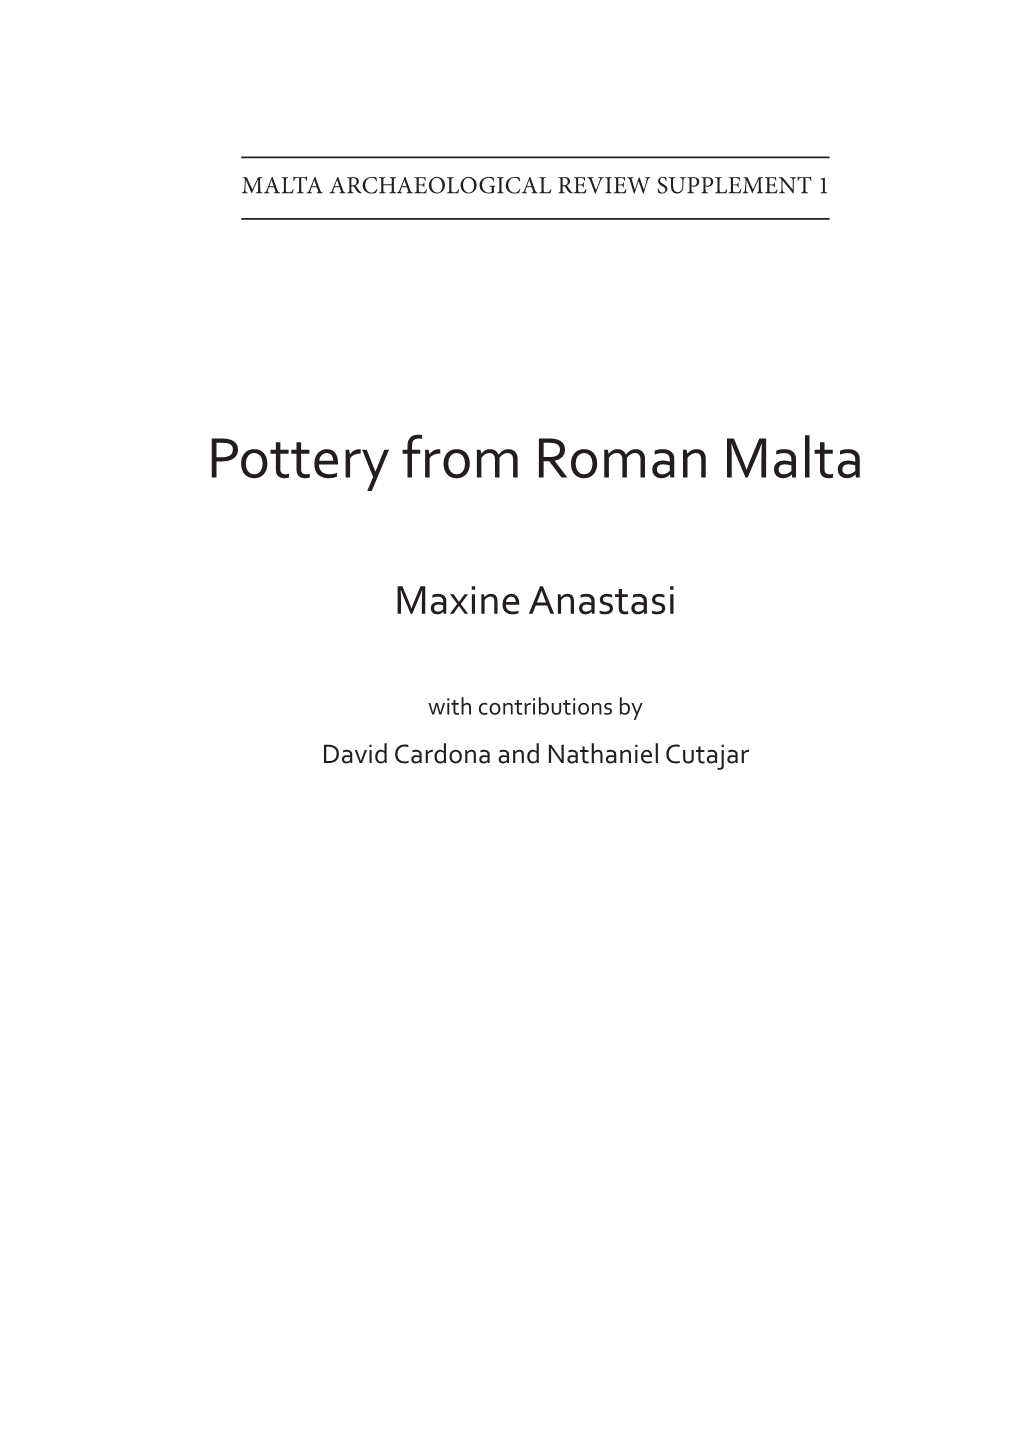 Pottery from Roman Malta